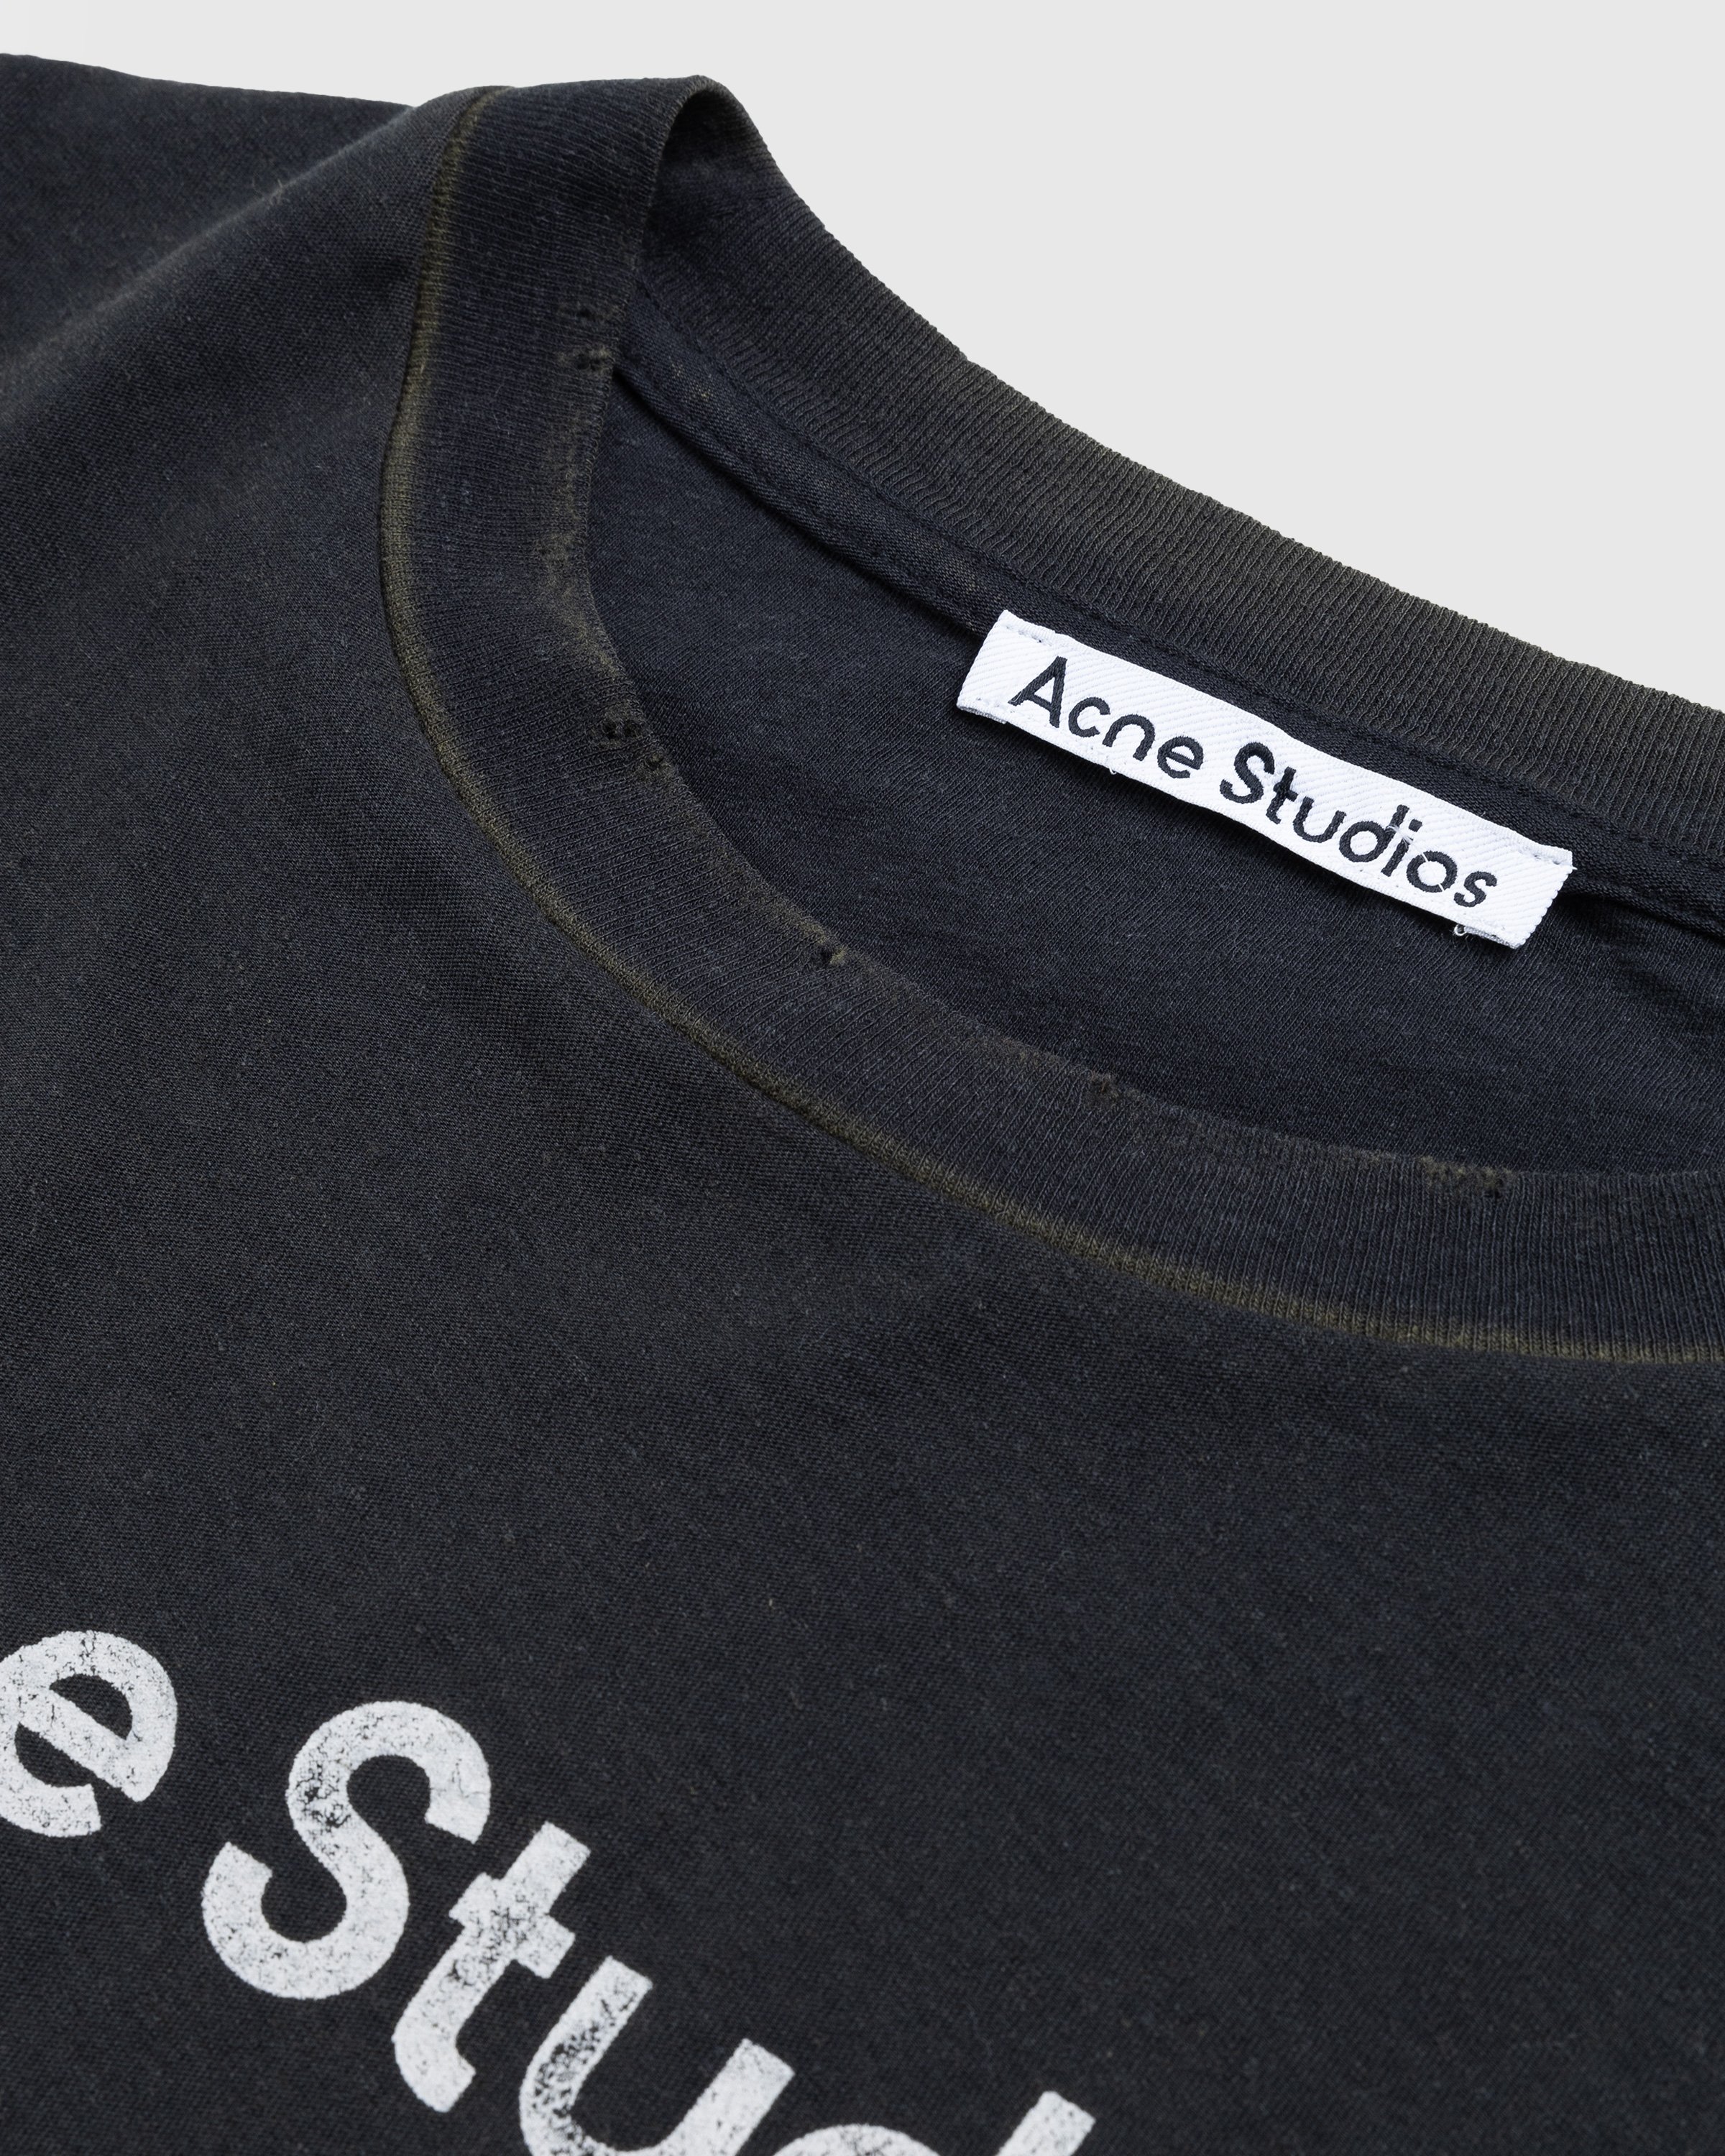 Acne Studios - Logo T-Shirt Black - Clothing - Black - Image 5